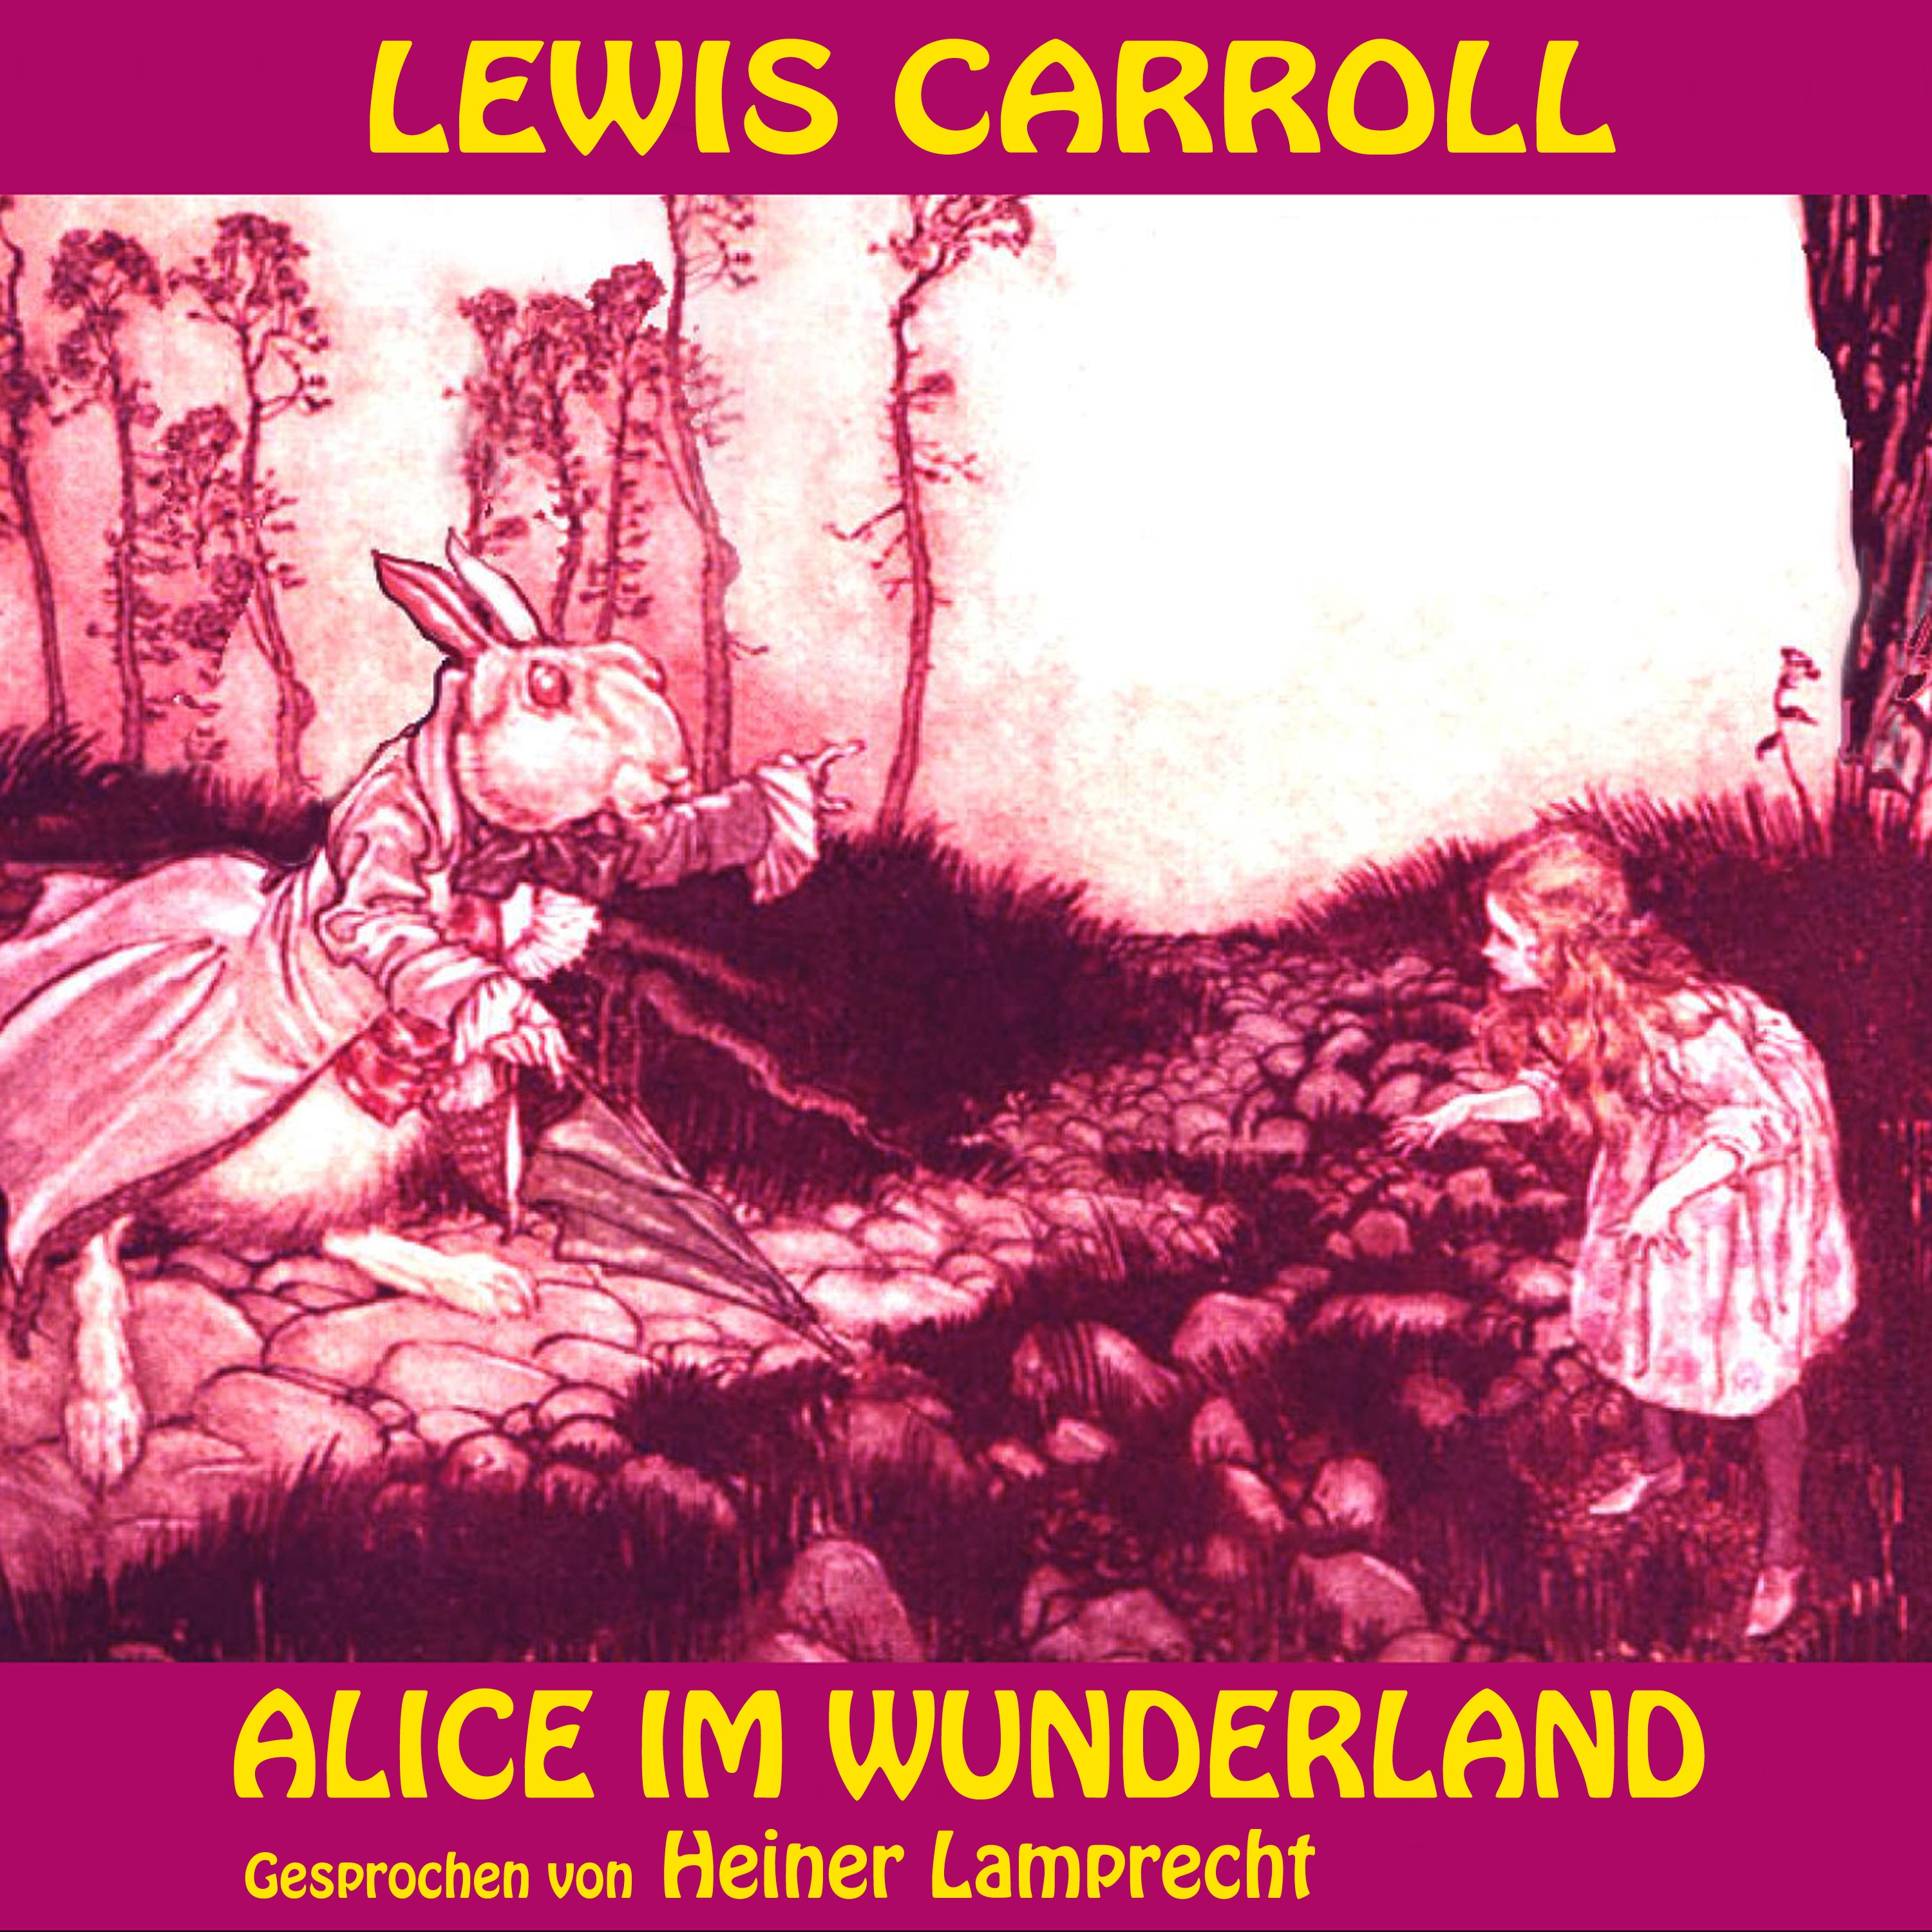 Kapitel 3: Alice im Wunderland (Teil 5)